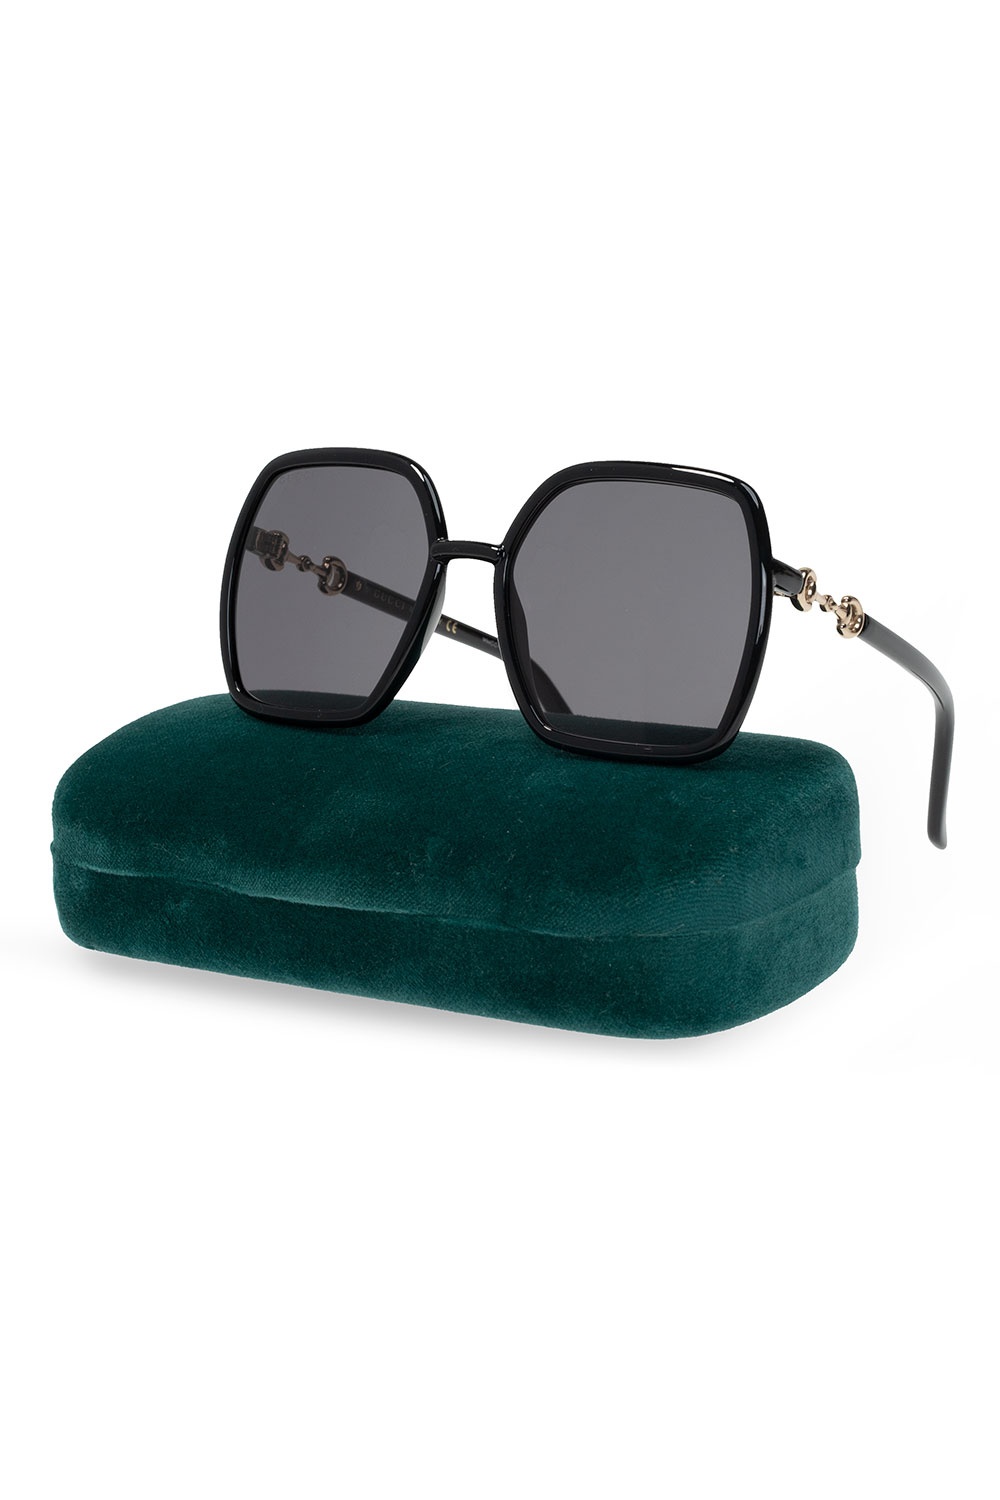 Gucci Sunglasses with horsebit